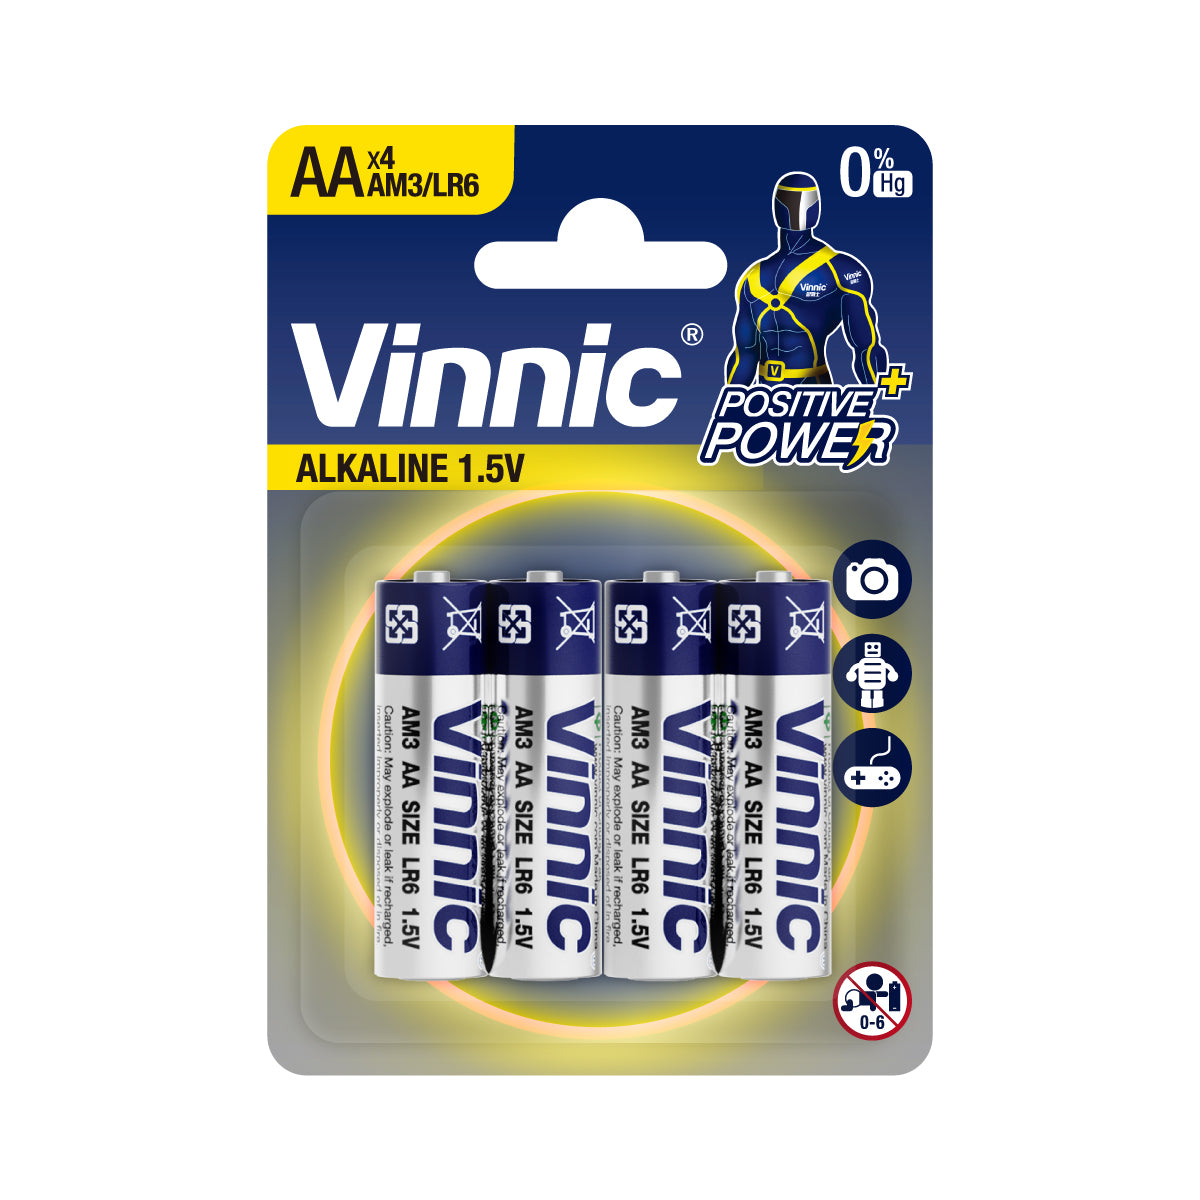 Vinnic Alkaline Battery AA AM3 / LR6 (1.5V) - 4Count